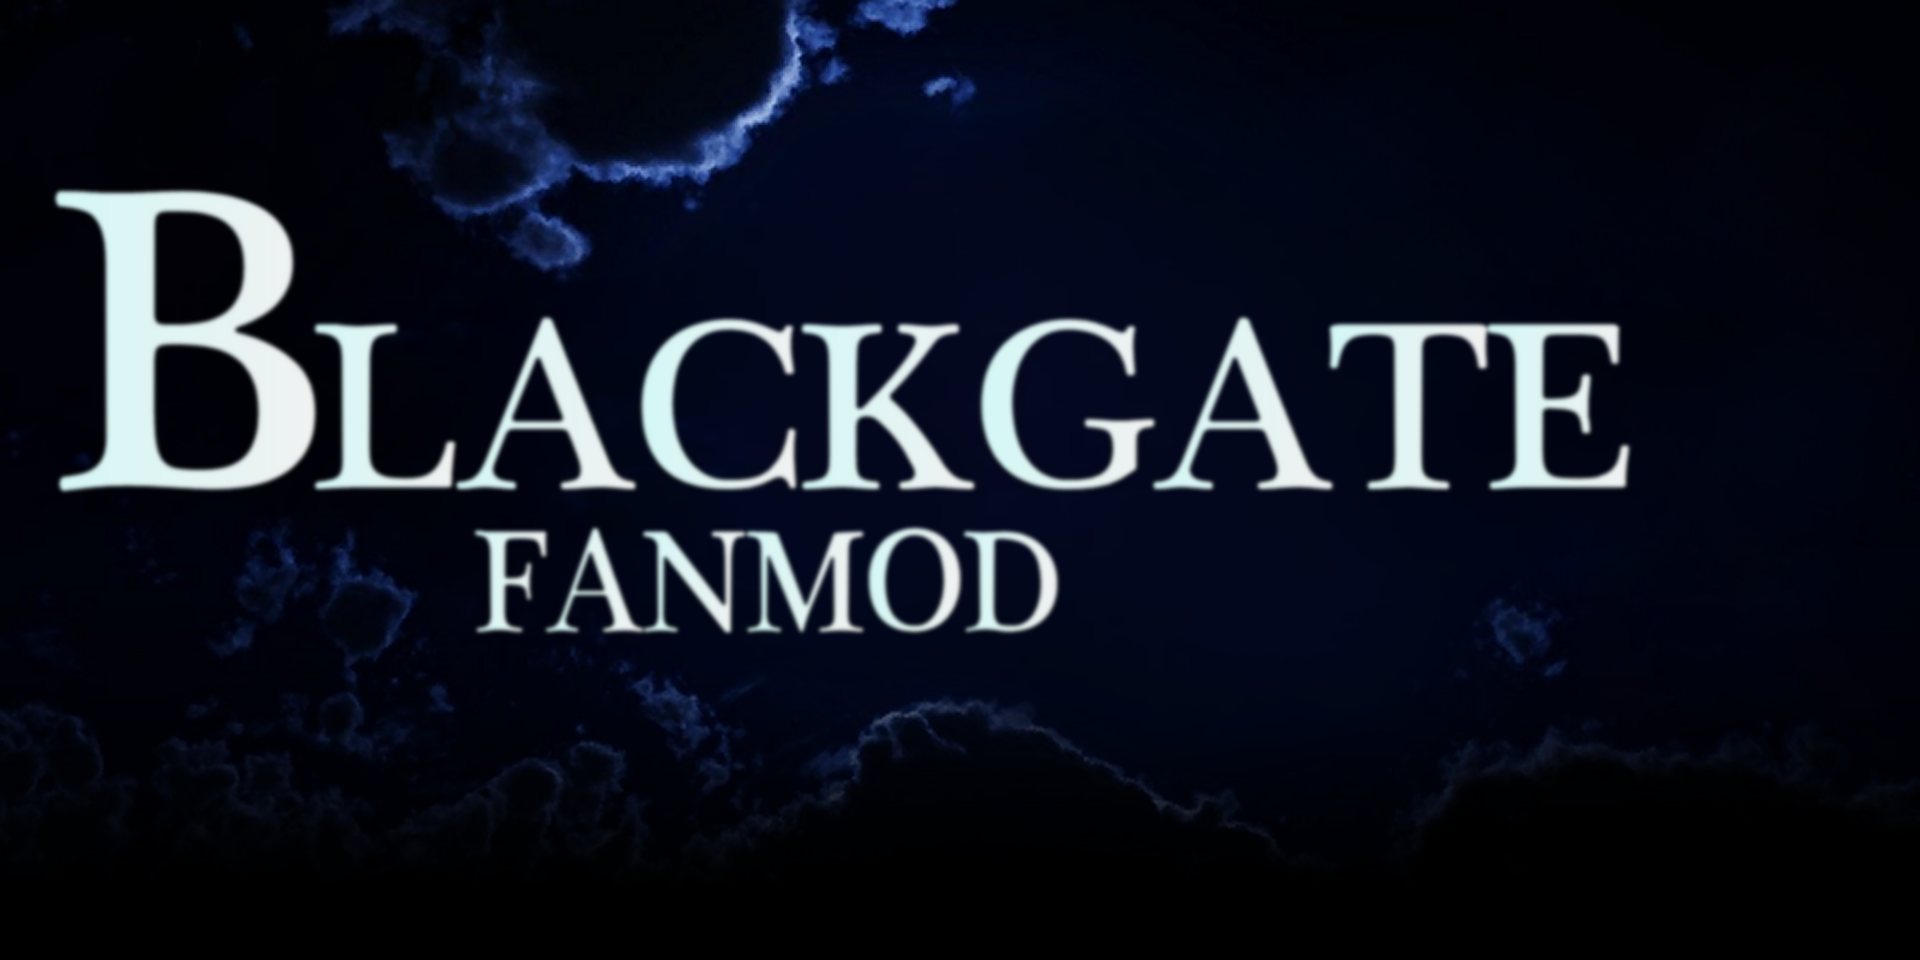 Blackgate the Visual Novel - FanMod